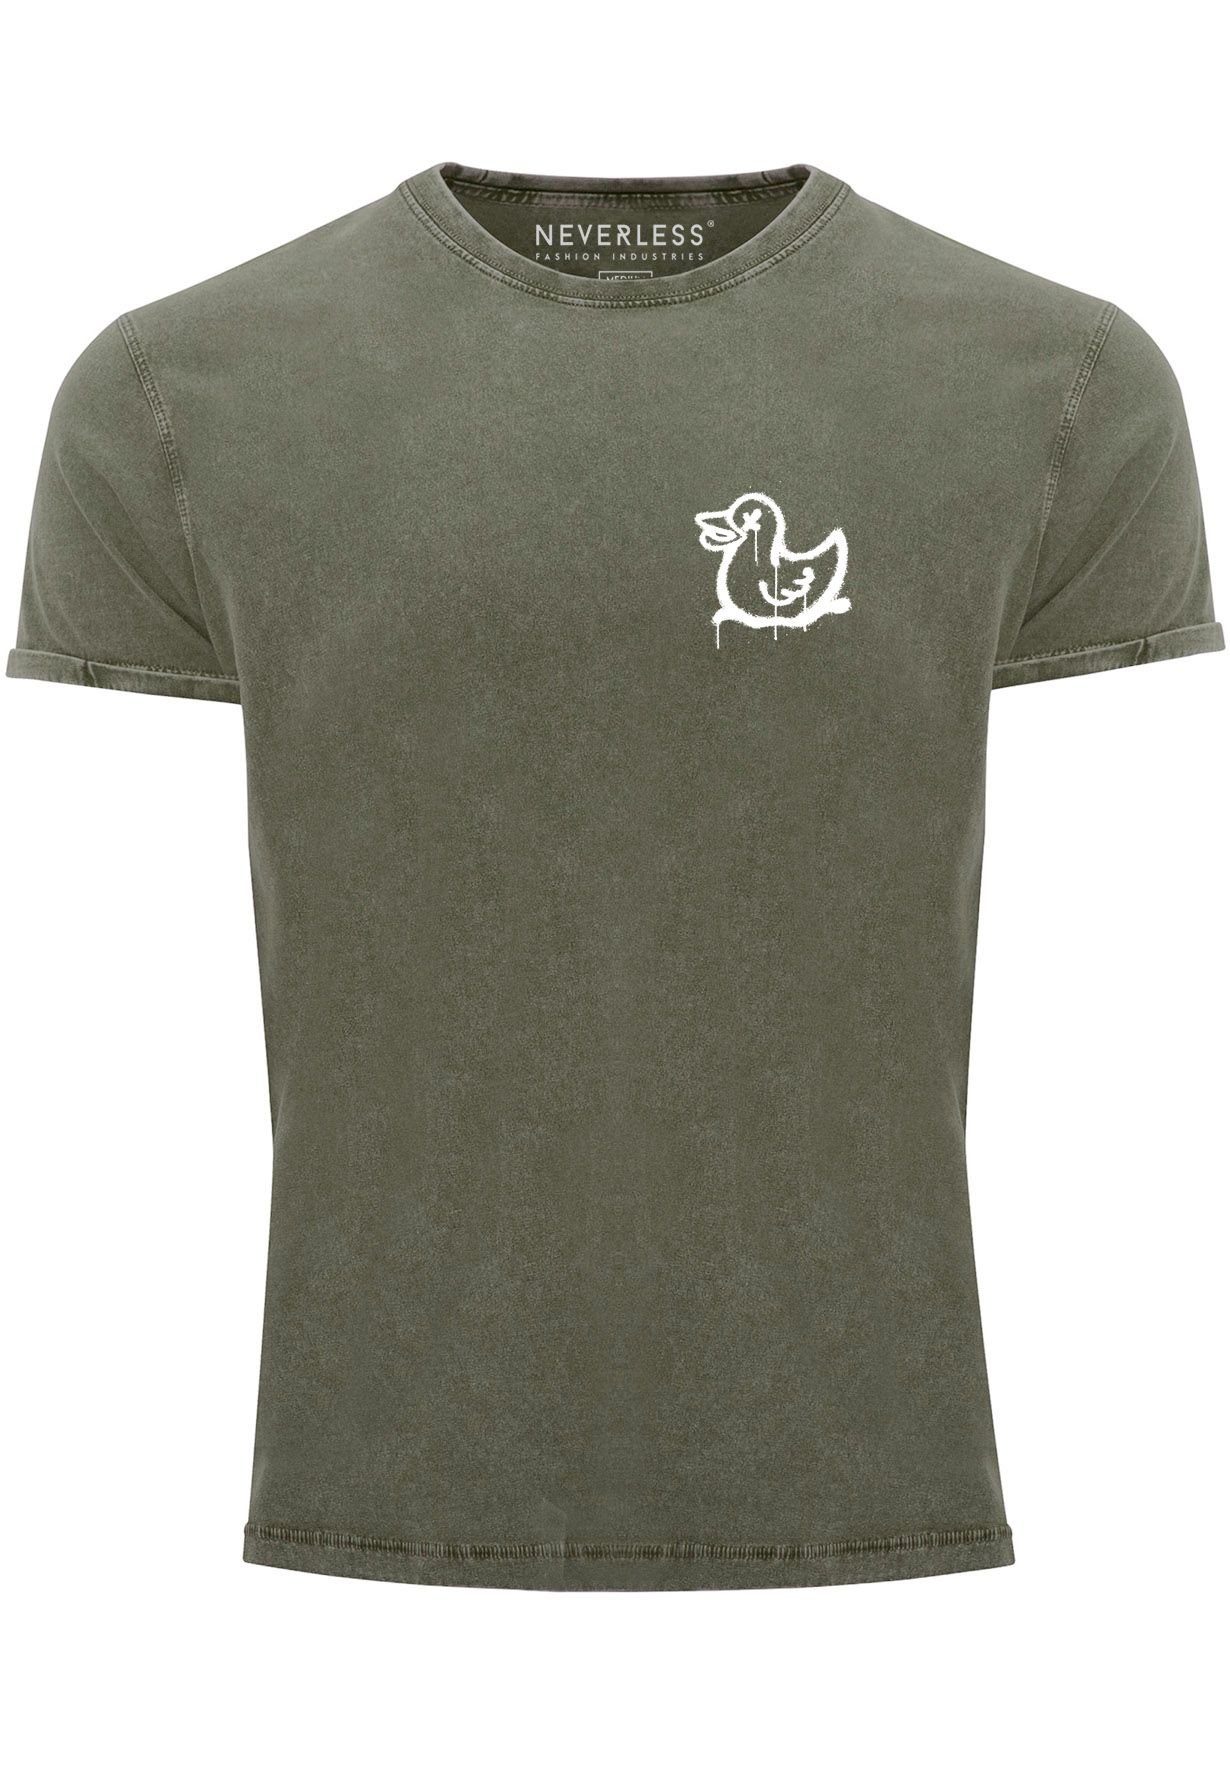 Neverless Print-Shirt Herren Vintage Shirt Drippy Duck Ente Graffiti Style Printshirt T-Shir mit Print oliv